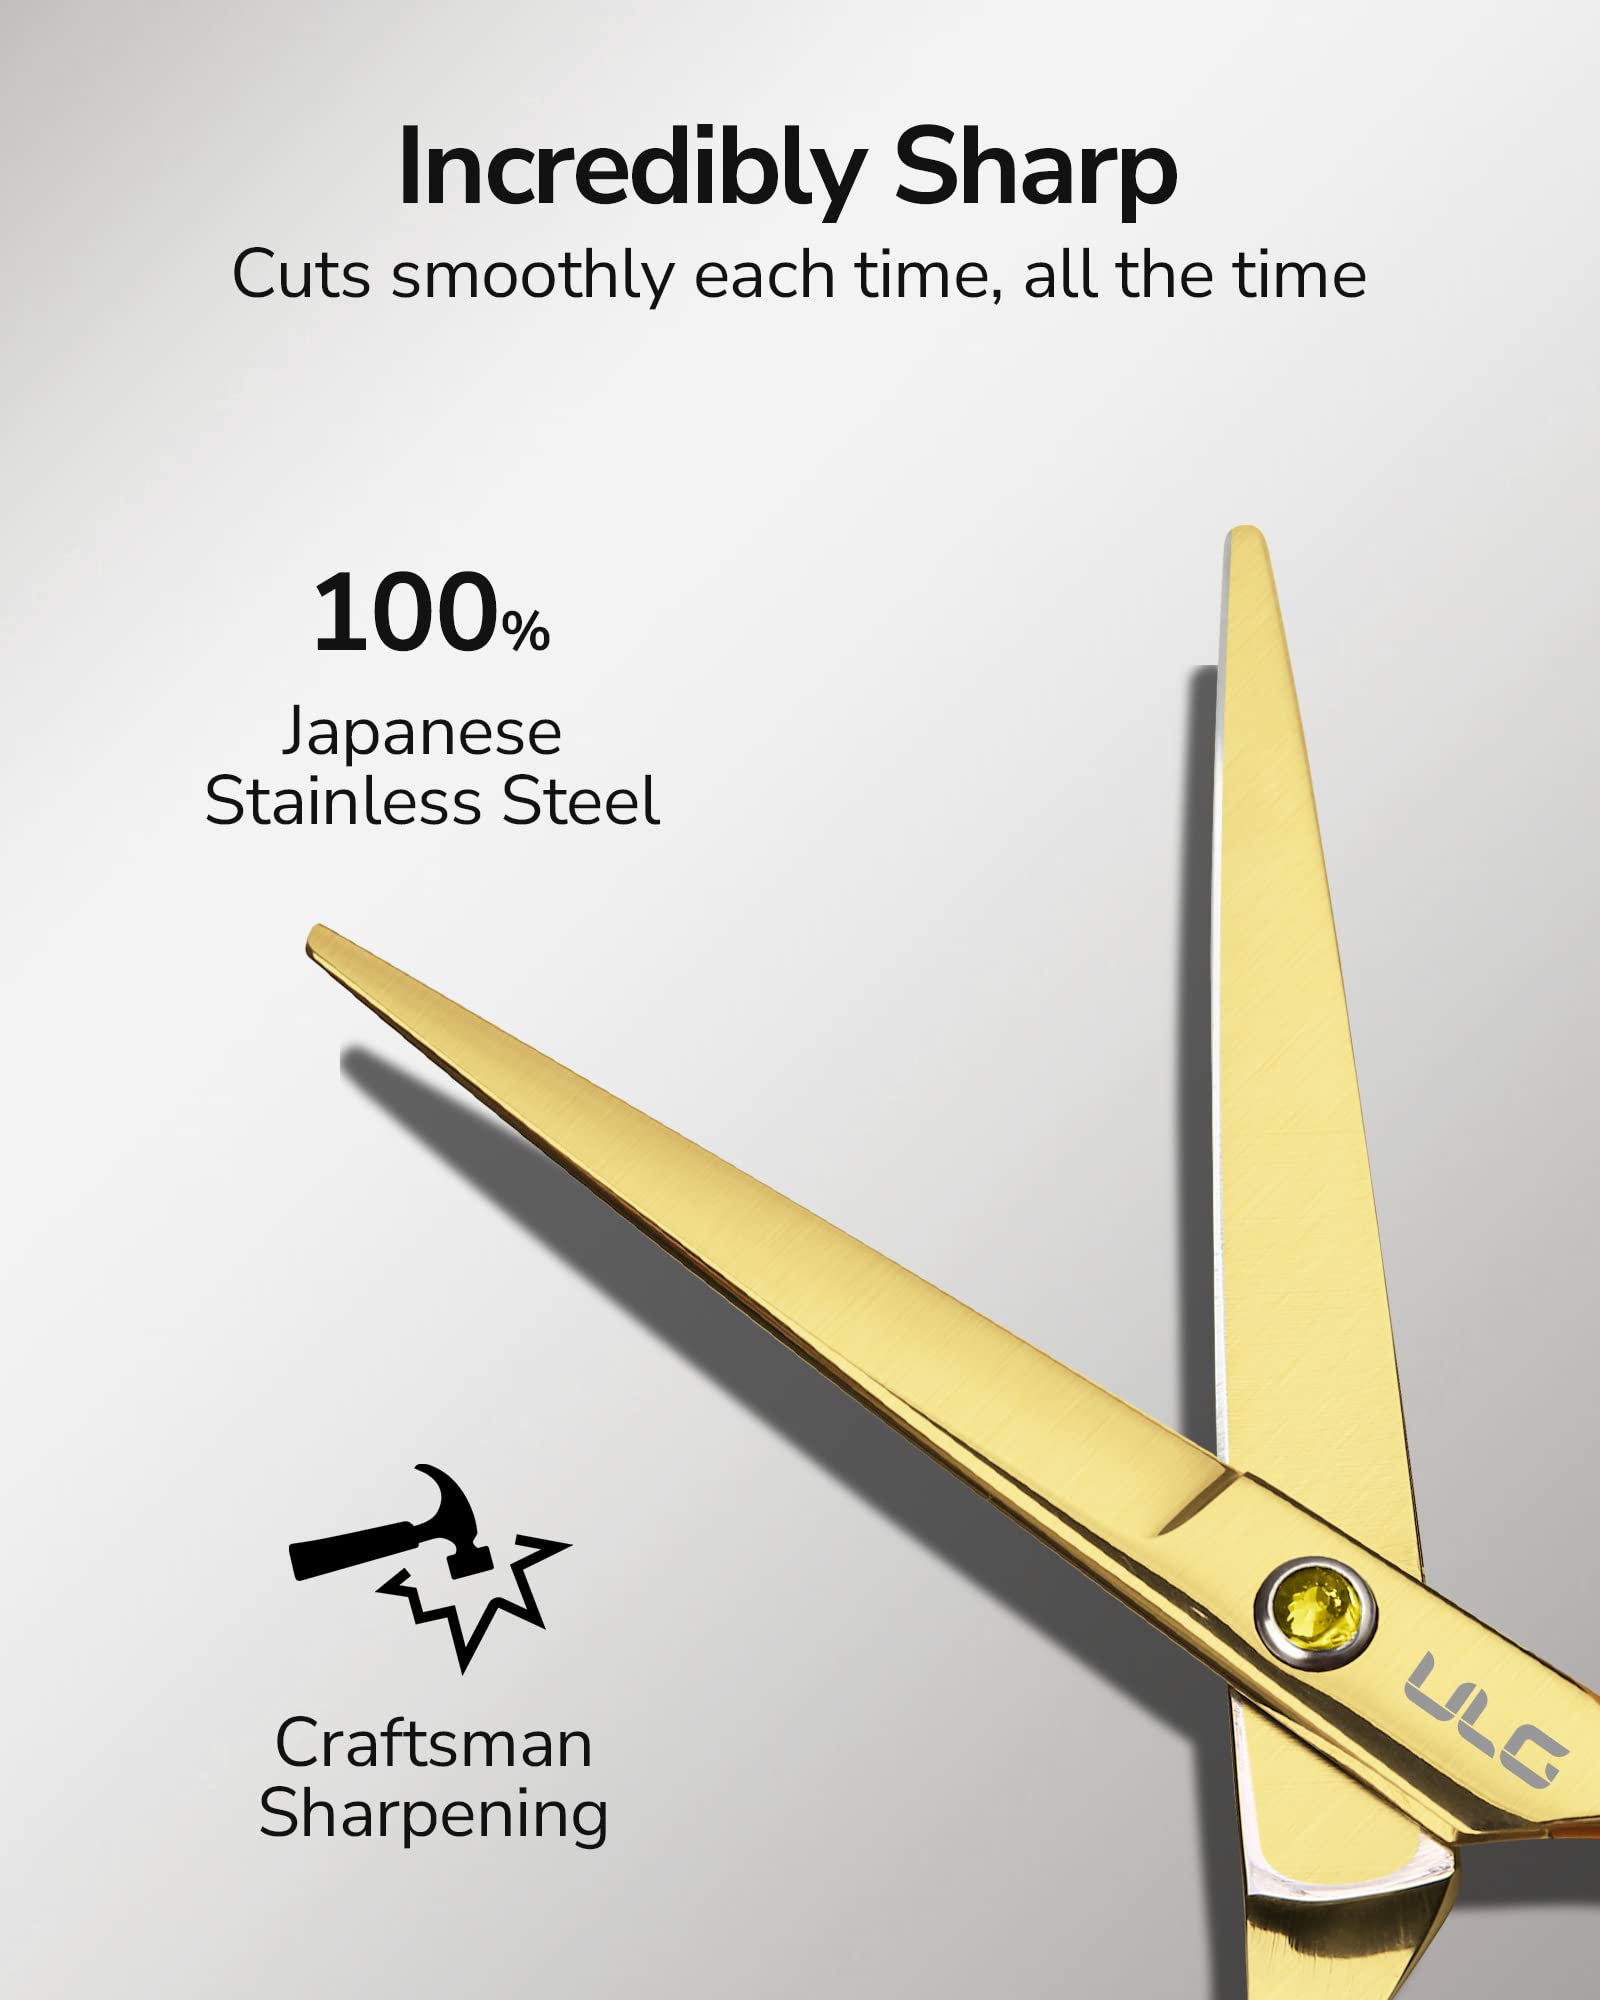 Hair Cutting Scissors, ULG Professional Hair Scissors 6.5 inch Right-Hand Razor Edge Barber Scissors Salon Hair Cutting Shears Made of Japanese Stainless Steel, Hand Sharpened